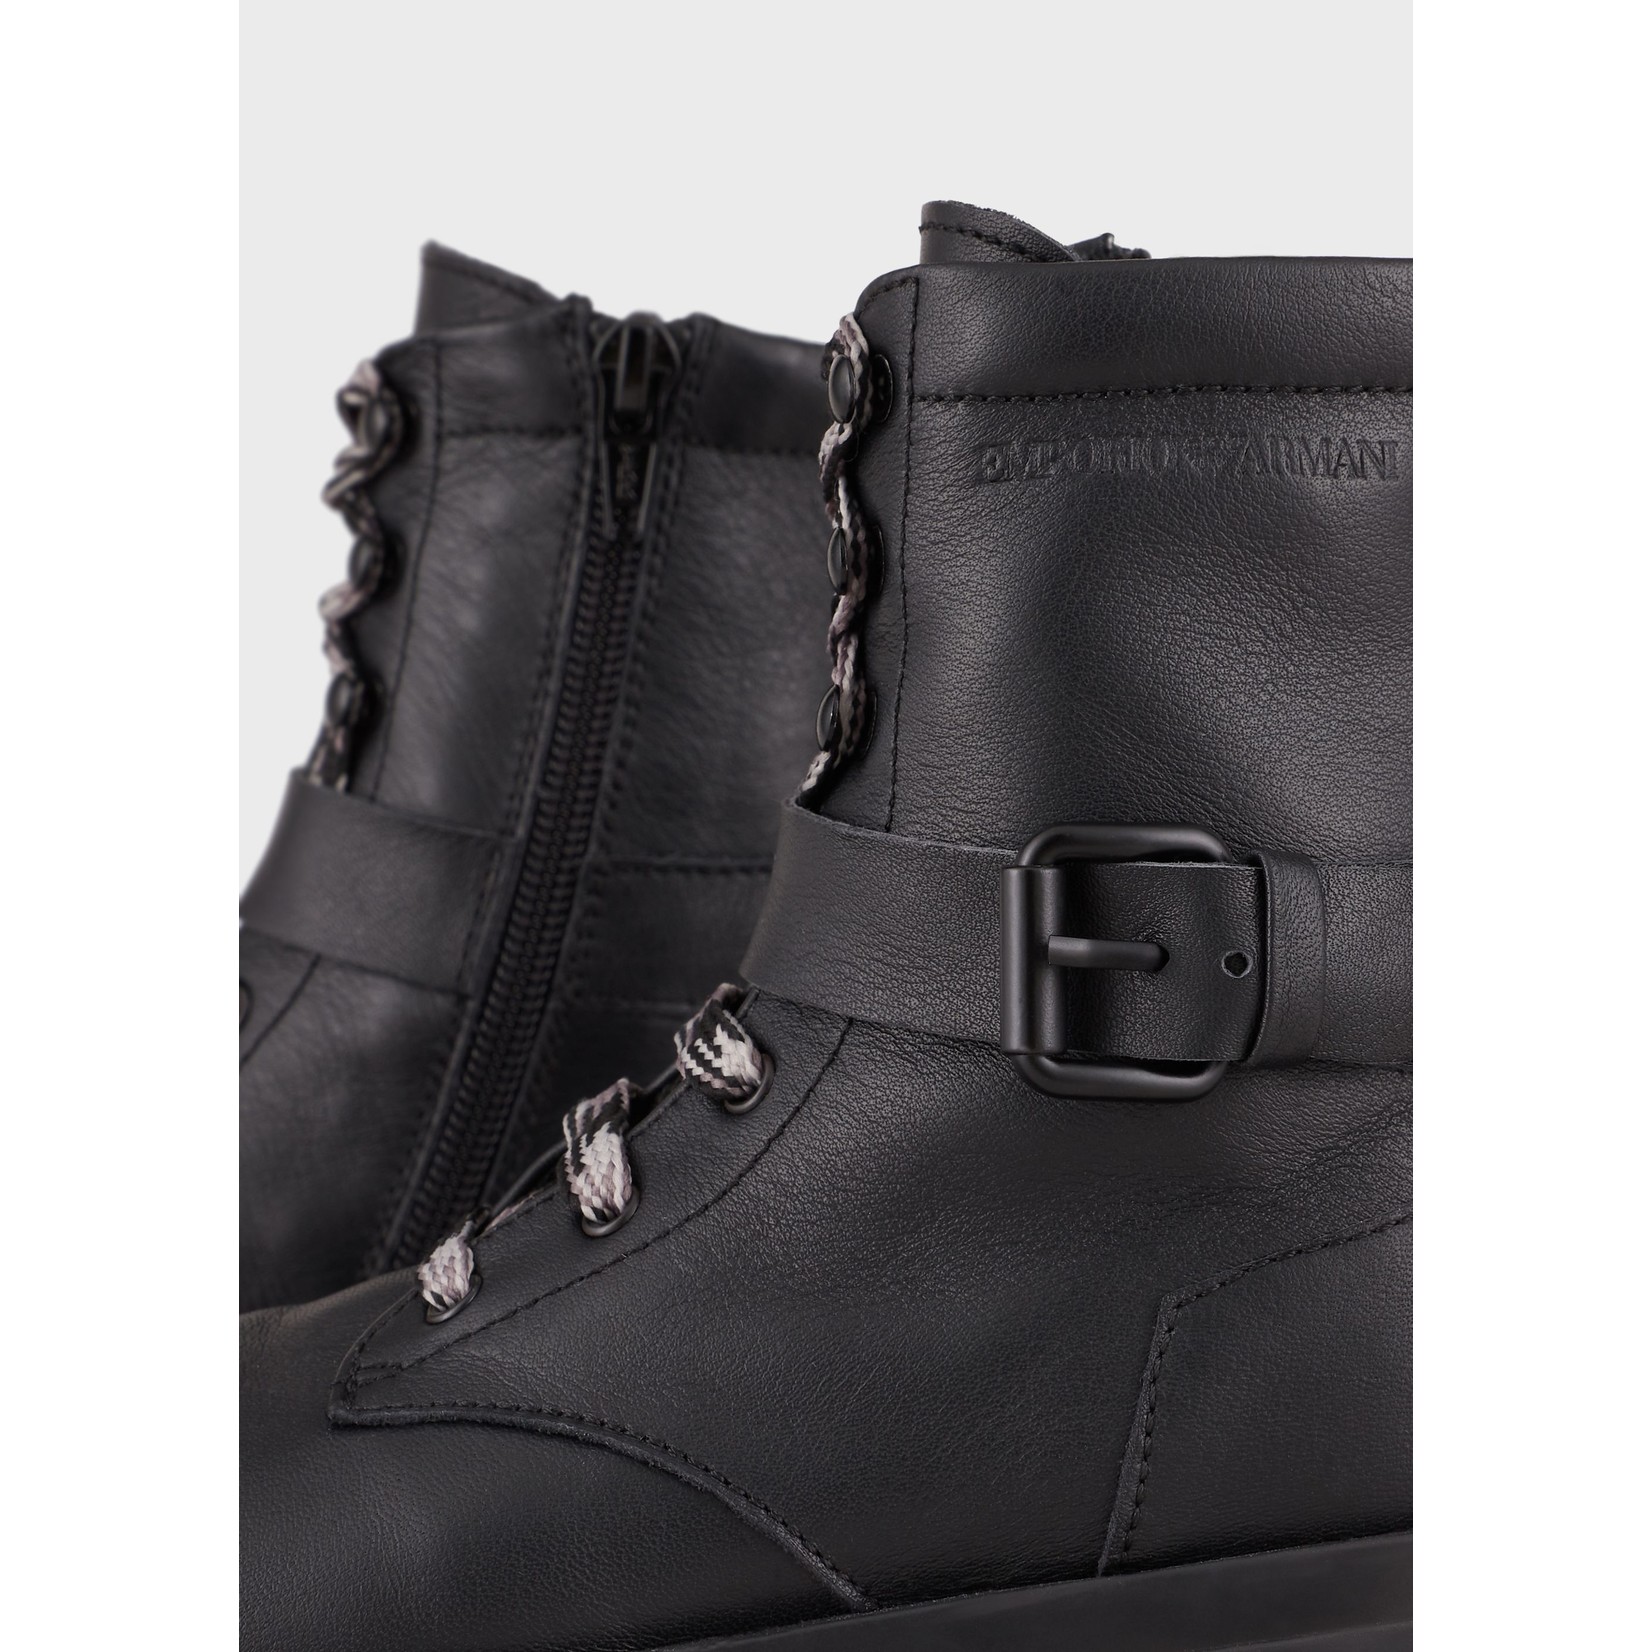 Emporio Armani Emporio Armani - Leather lace-up combat boots with strap